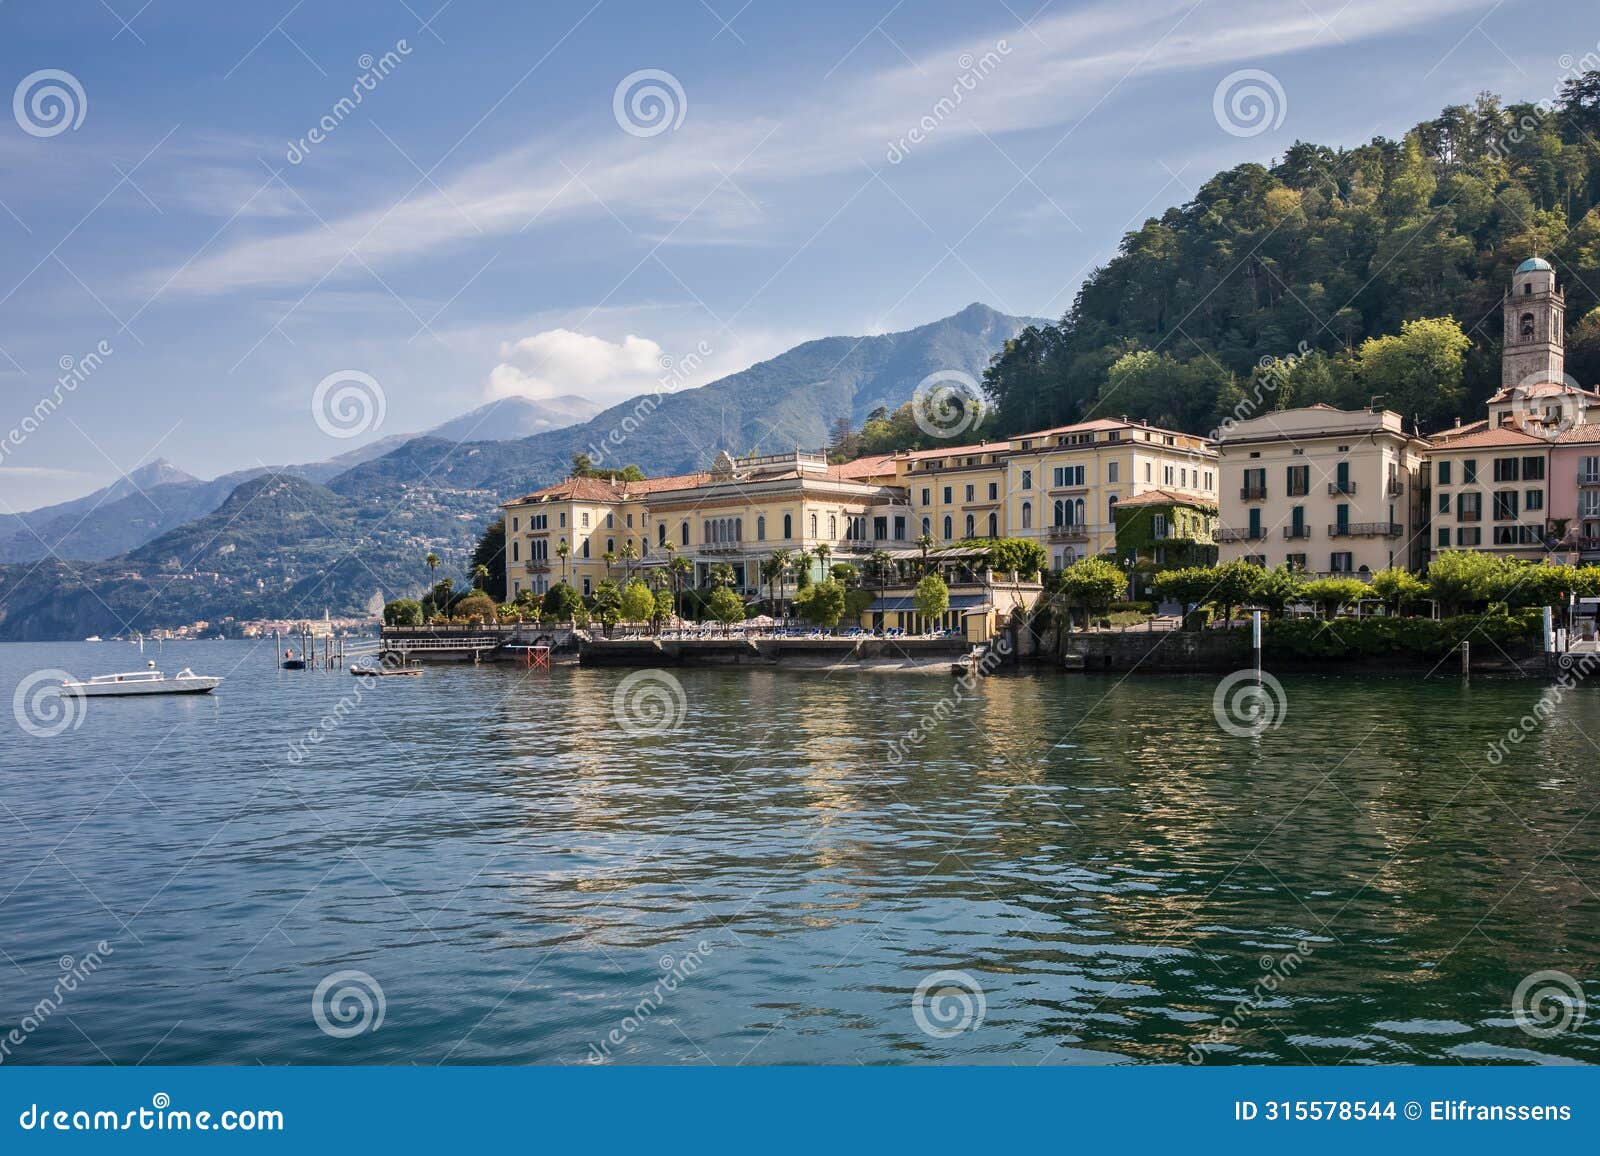 picturesque bellagio waterfront, como lake, italy